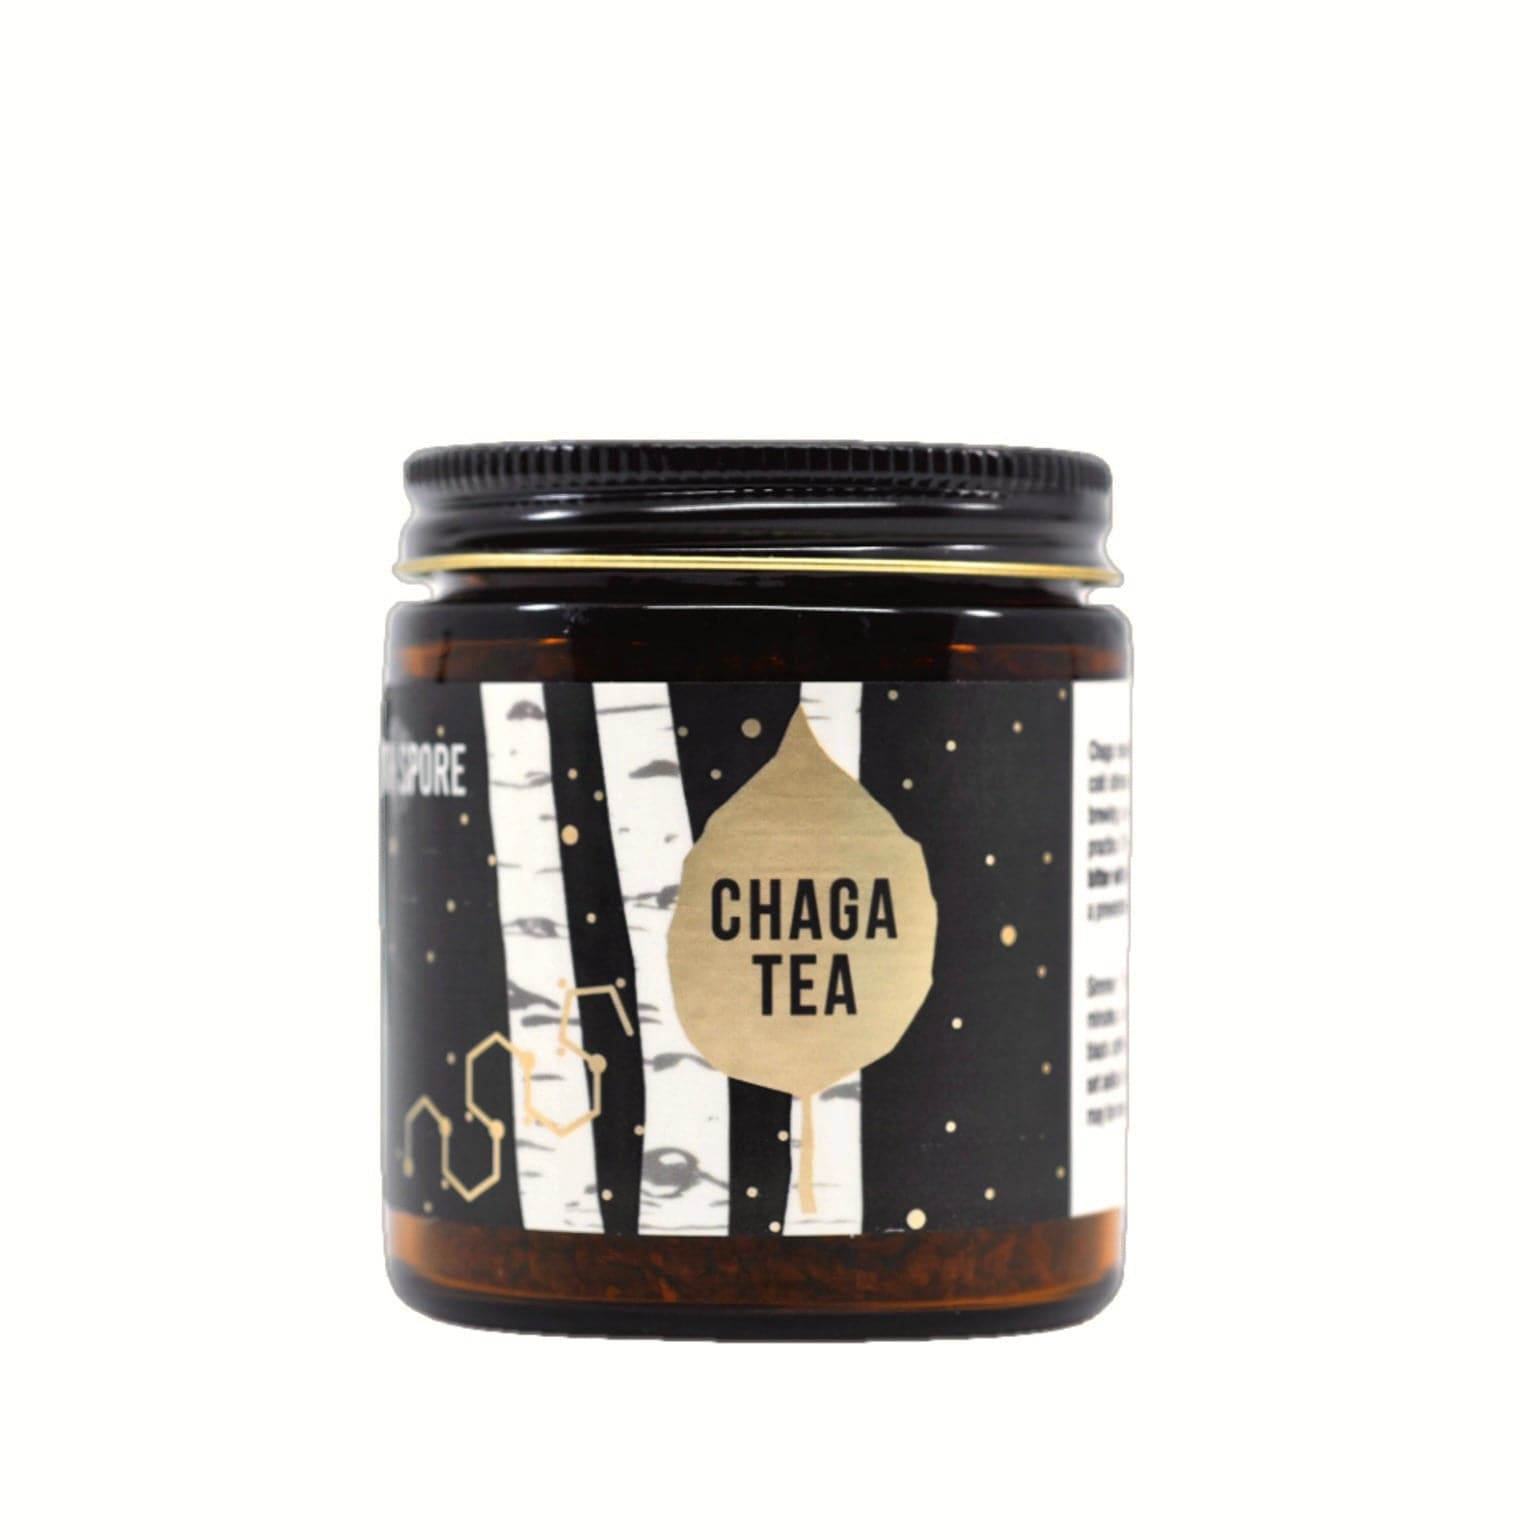 Wild Foraged Chaga Mushroom Tea Wellness Supplements North Spore 1.2 oz jar 